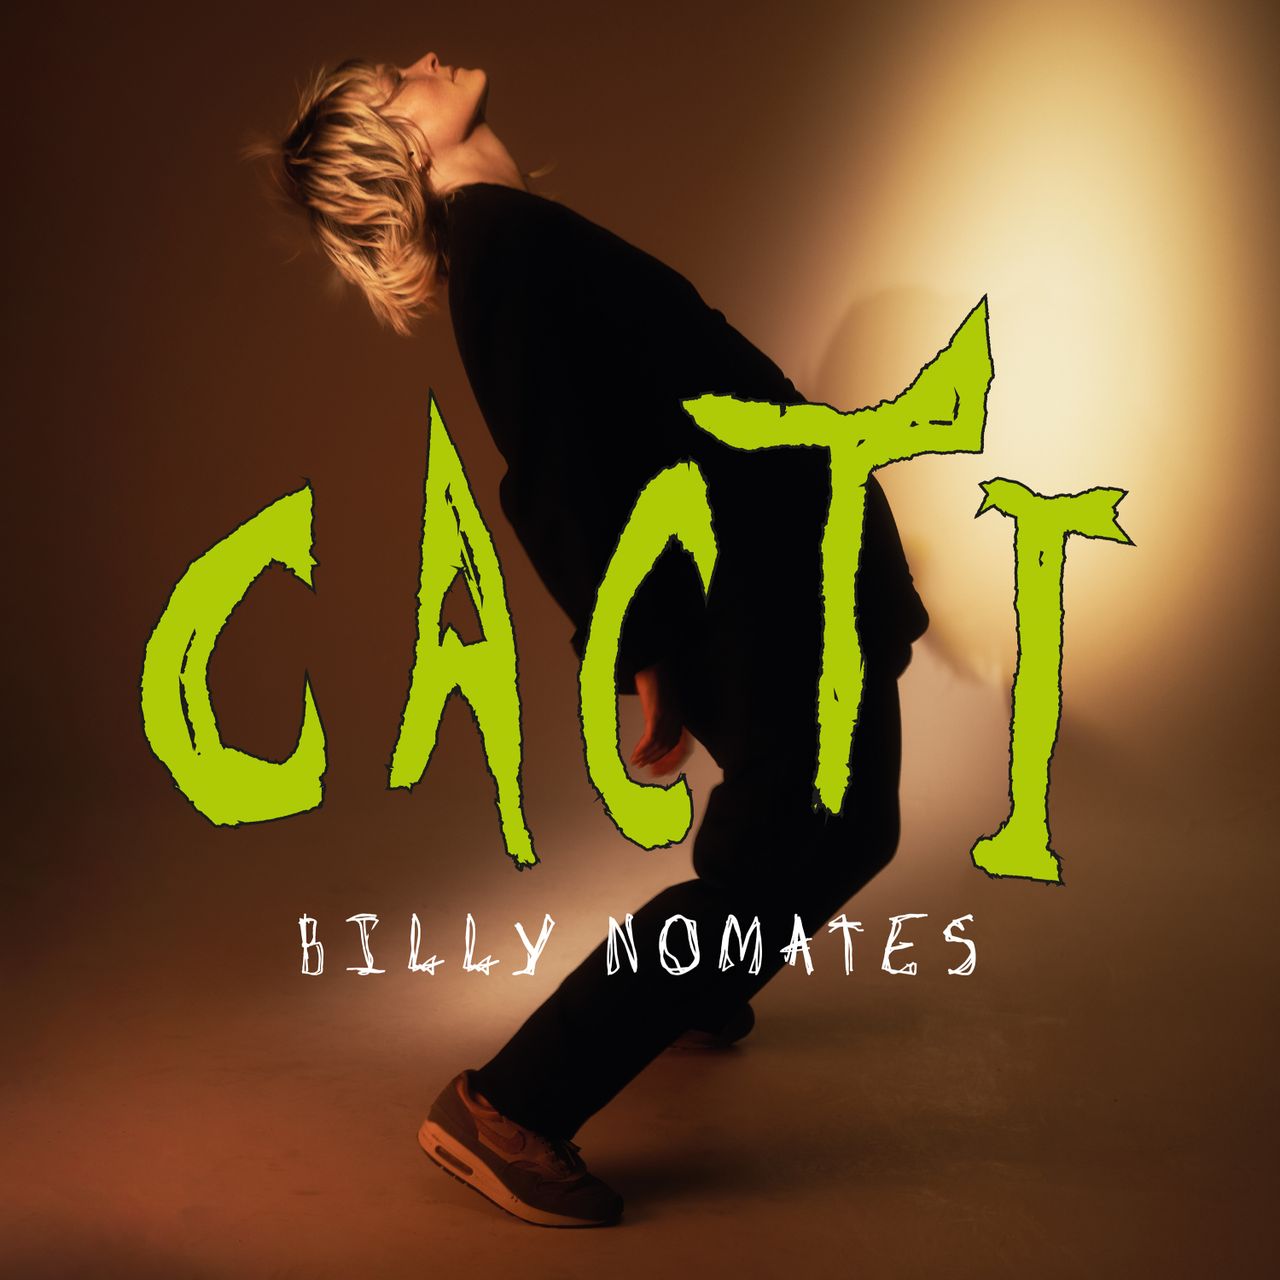 Billy Nomates und"Cacti"